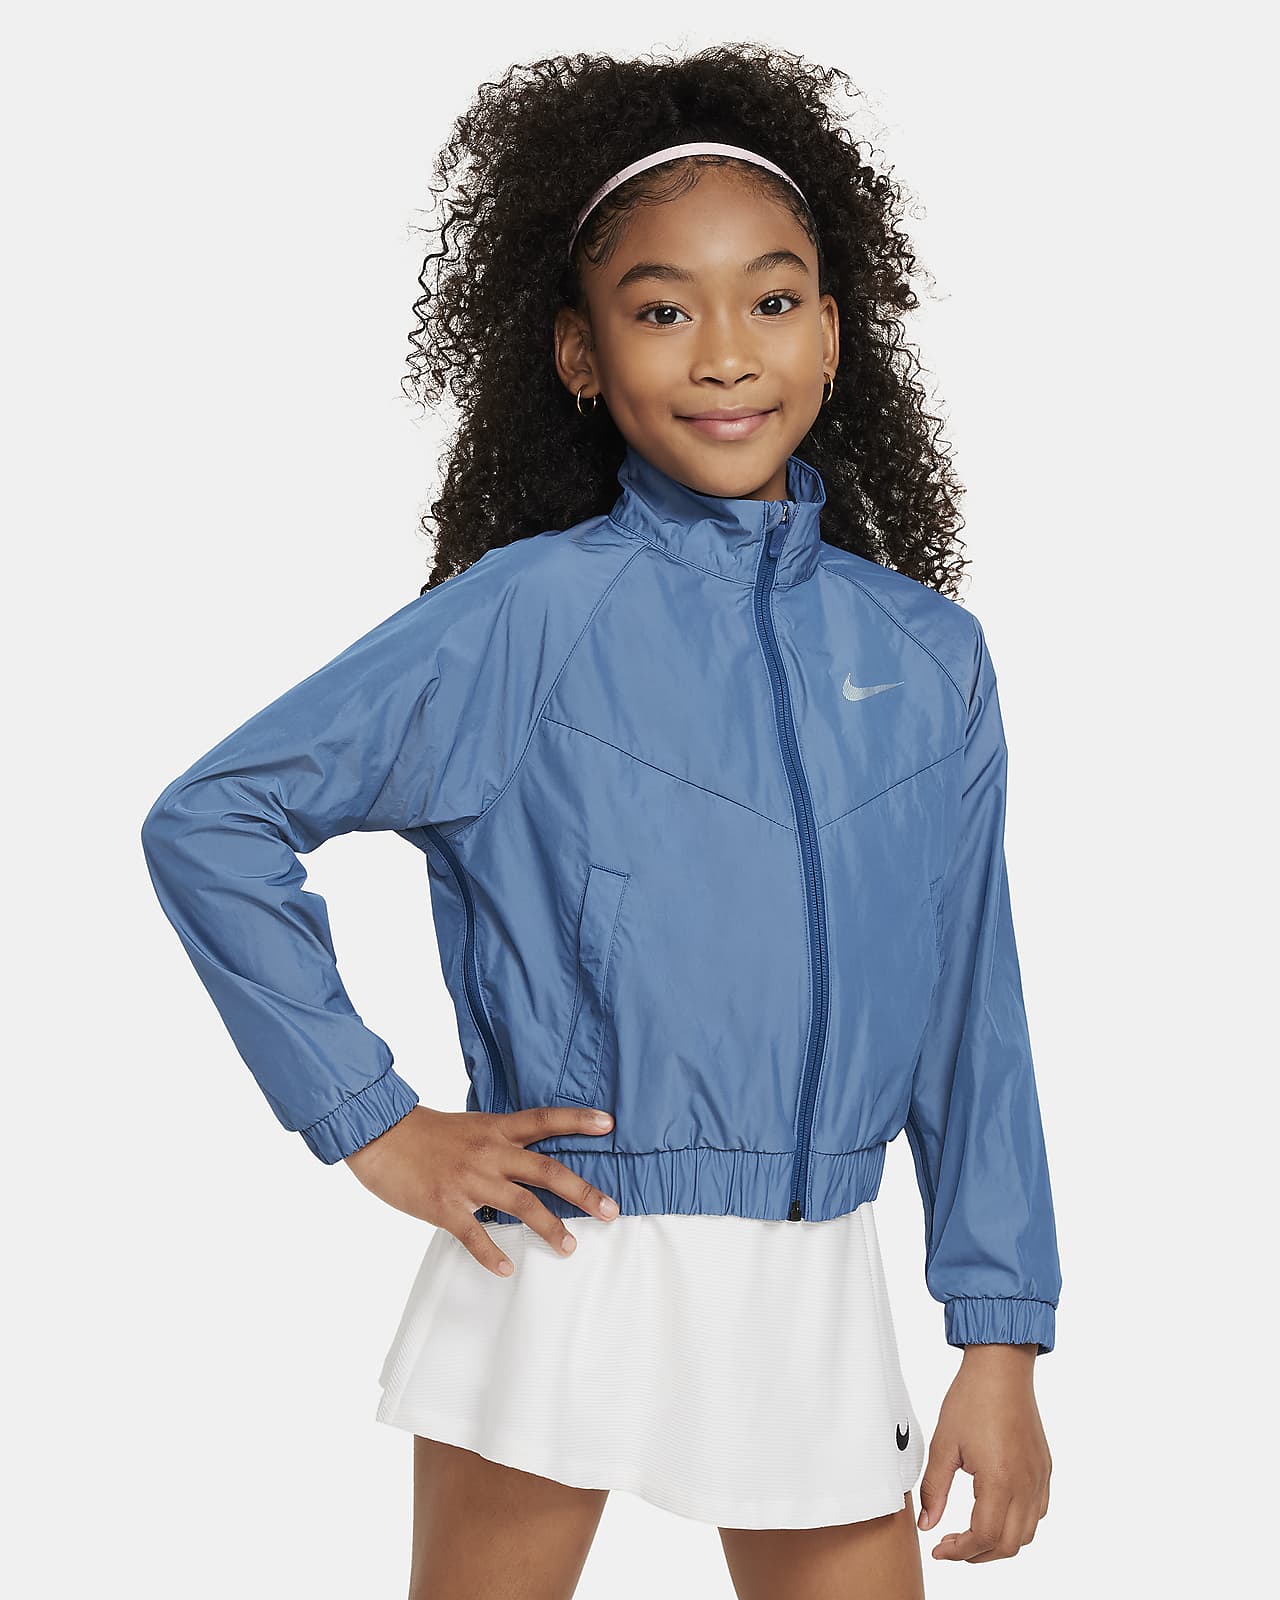 Nike Sportswear Windrunner laza fazonú kabát nagyobb gyerekeknek (lányoknak)